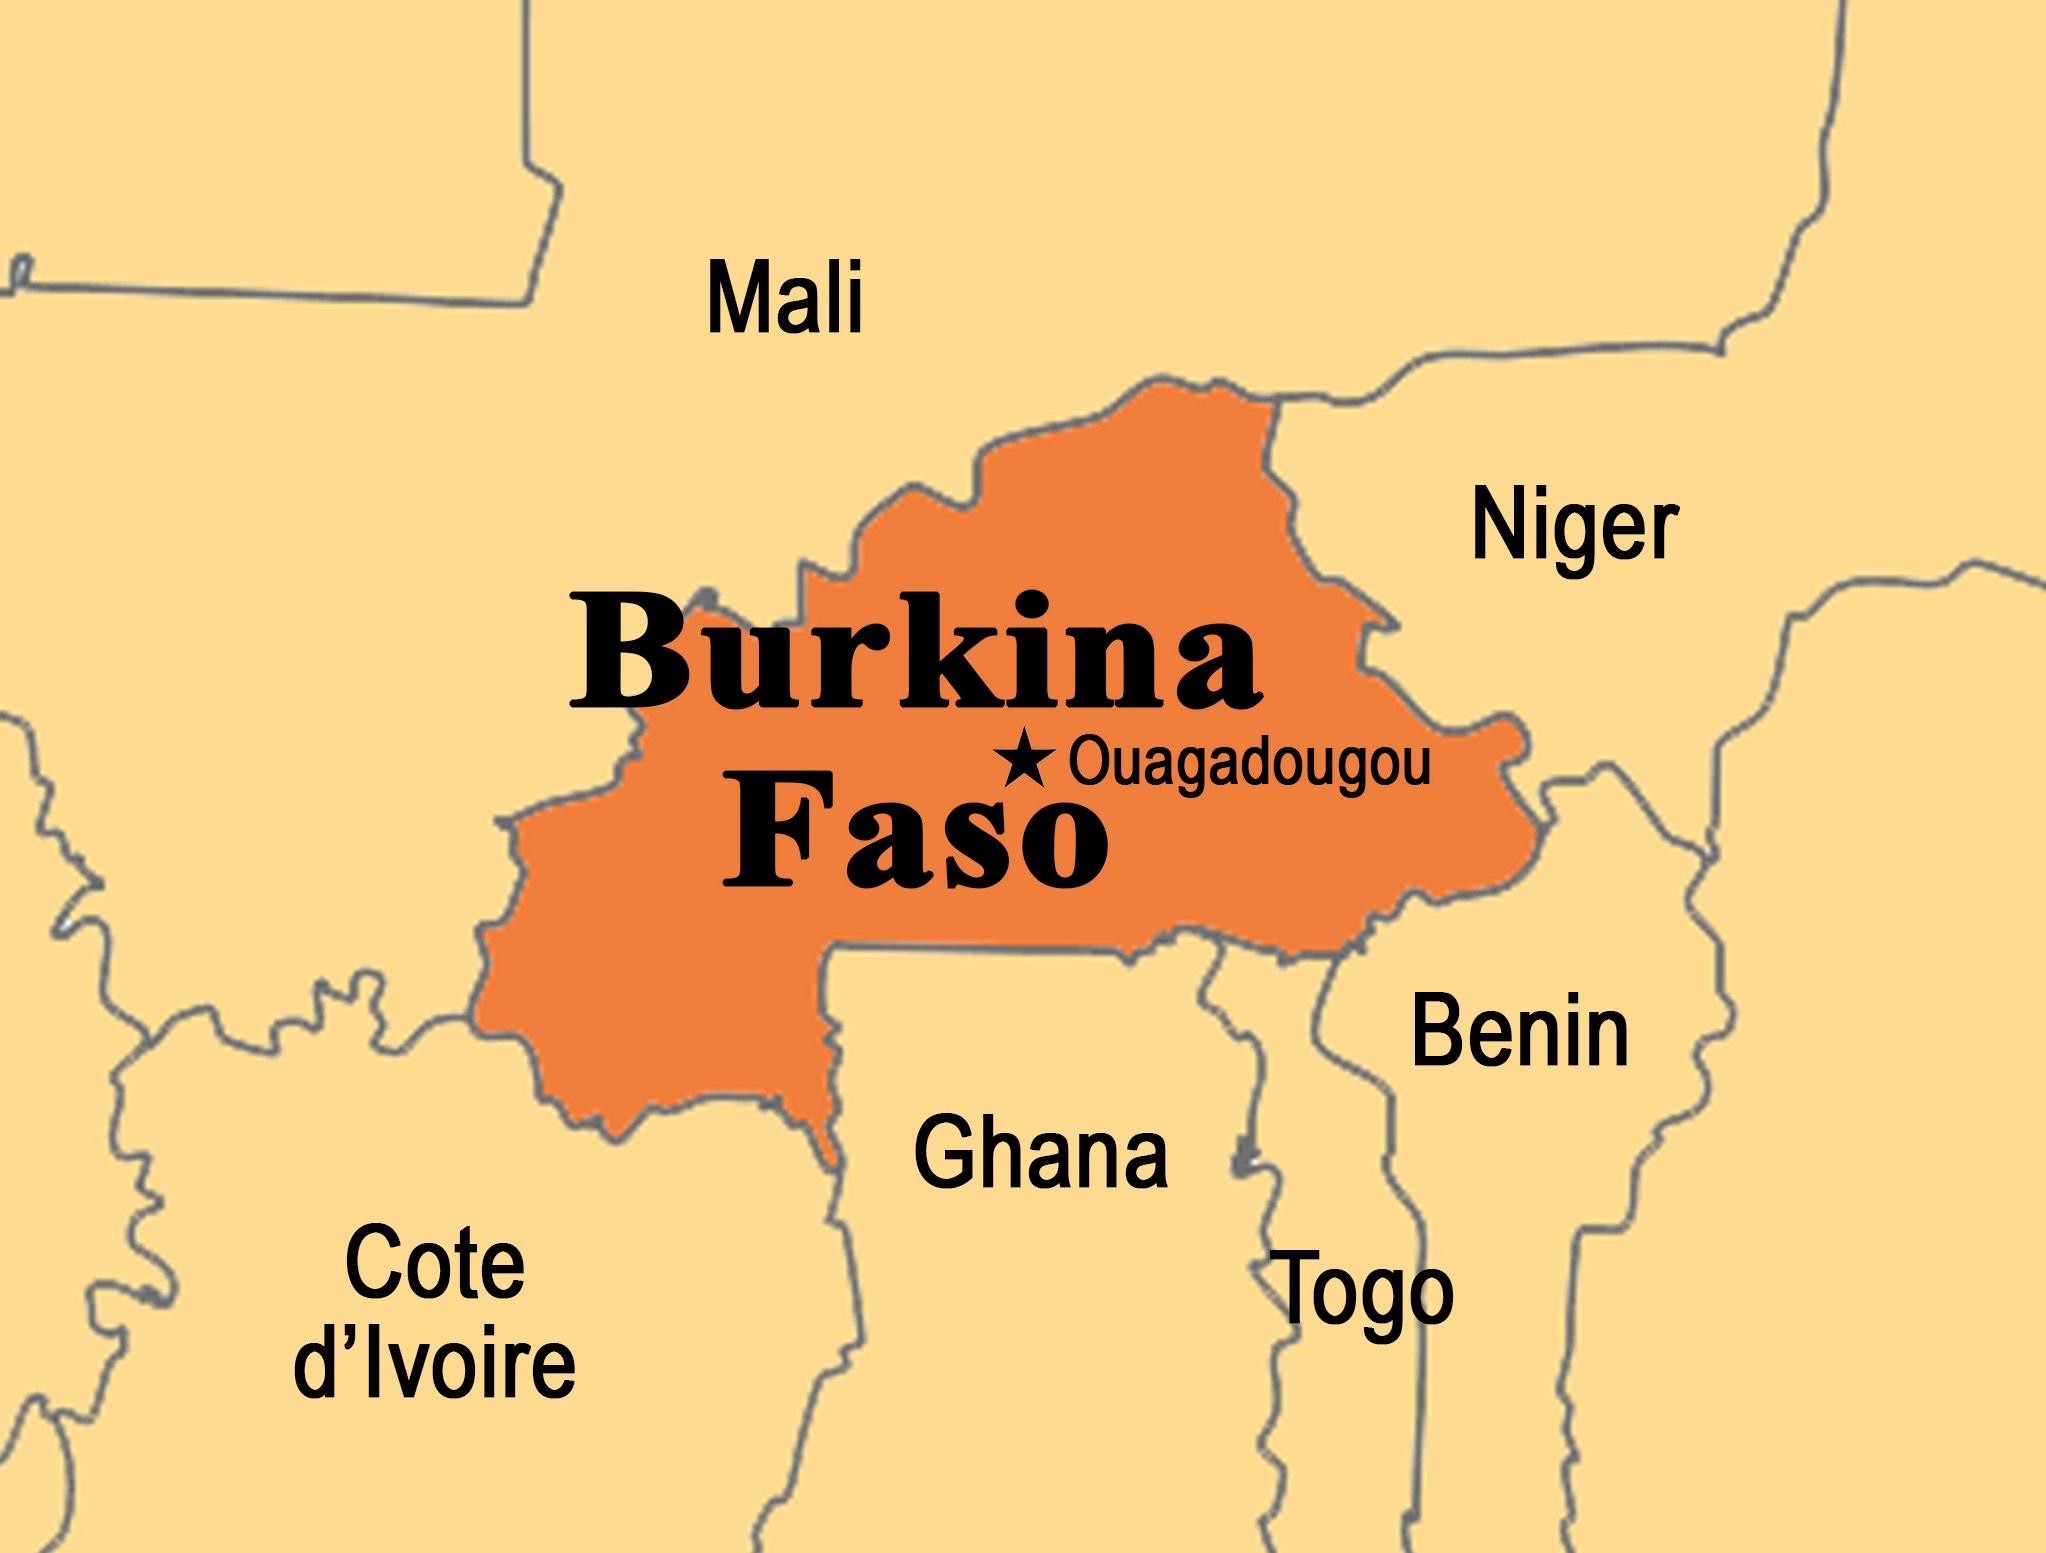 40 killed in two terrorist attacks in NW Burkina Faso